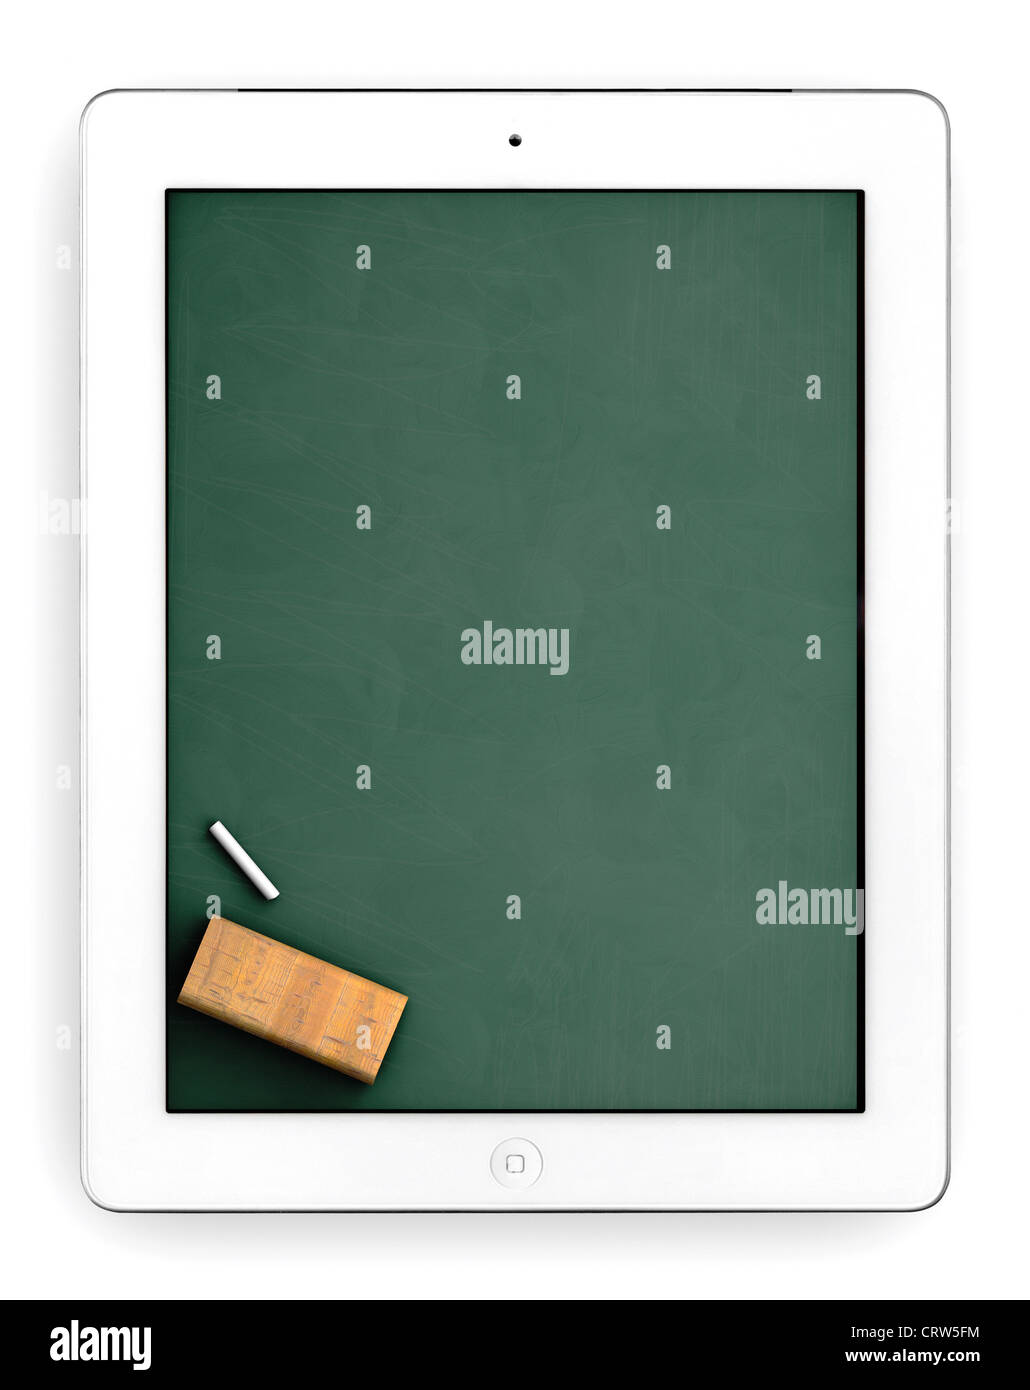 iPad 2 with school green board on screen. Stock Photo